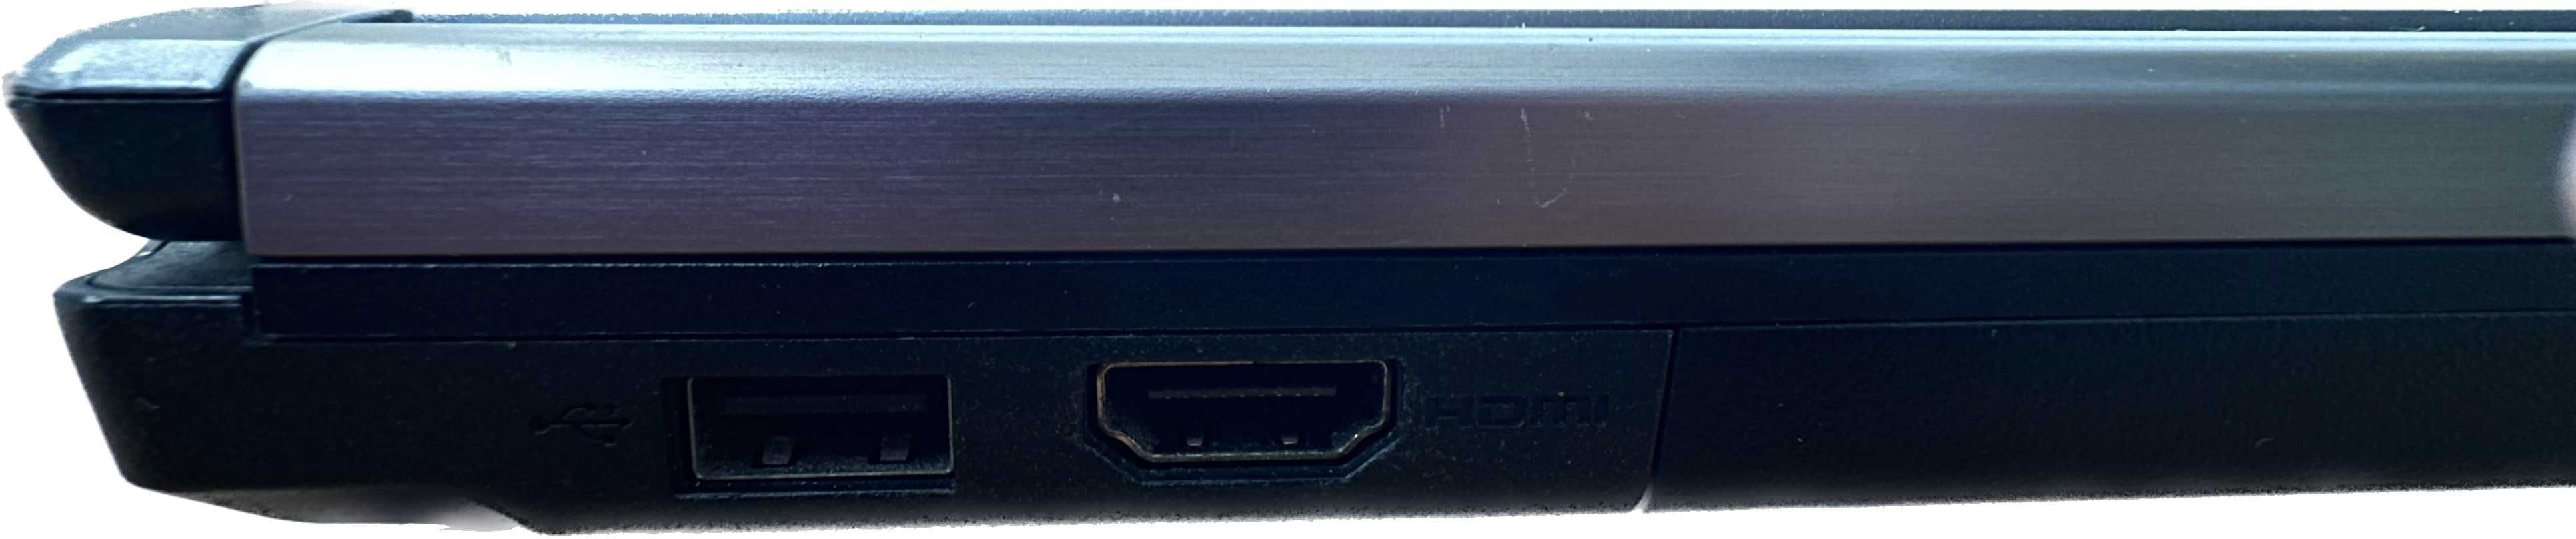 Ноутбук Fujitsu E756 15.6 FullHD IPS/i5 6300u/4Gb/256SSD/HDMI опт